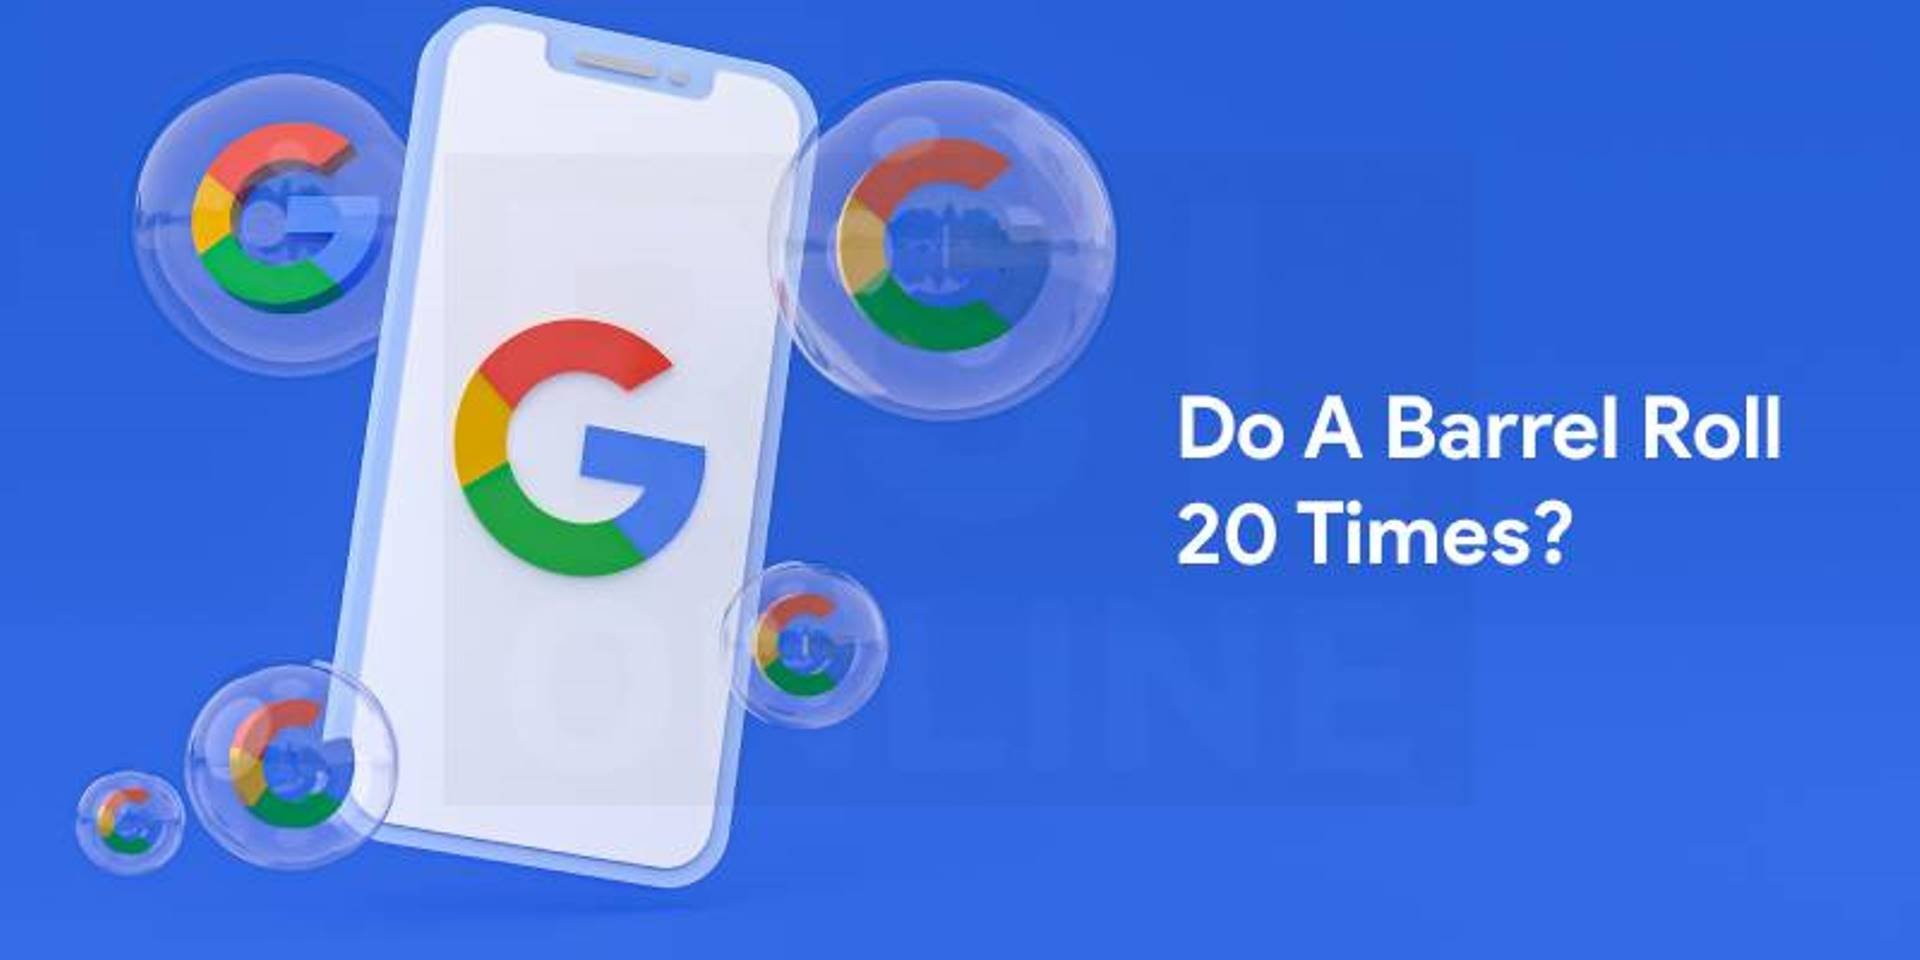 Do a Barrel Roll 5 Times? Google Tricks Games - TechyLoud